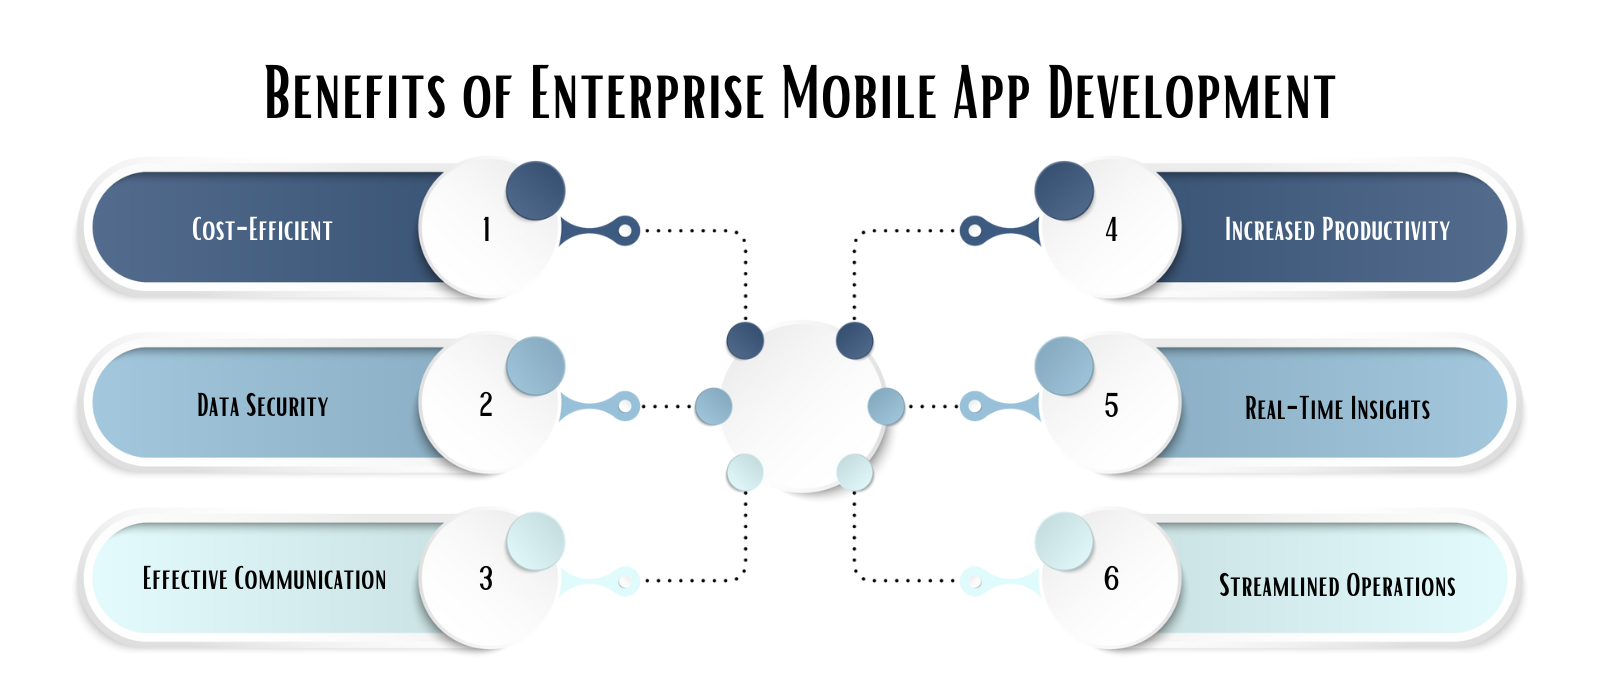 Enterprise Mobile App Development Benefits